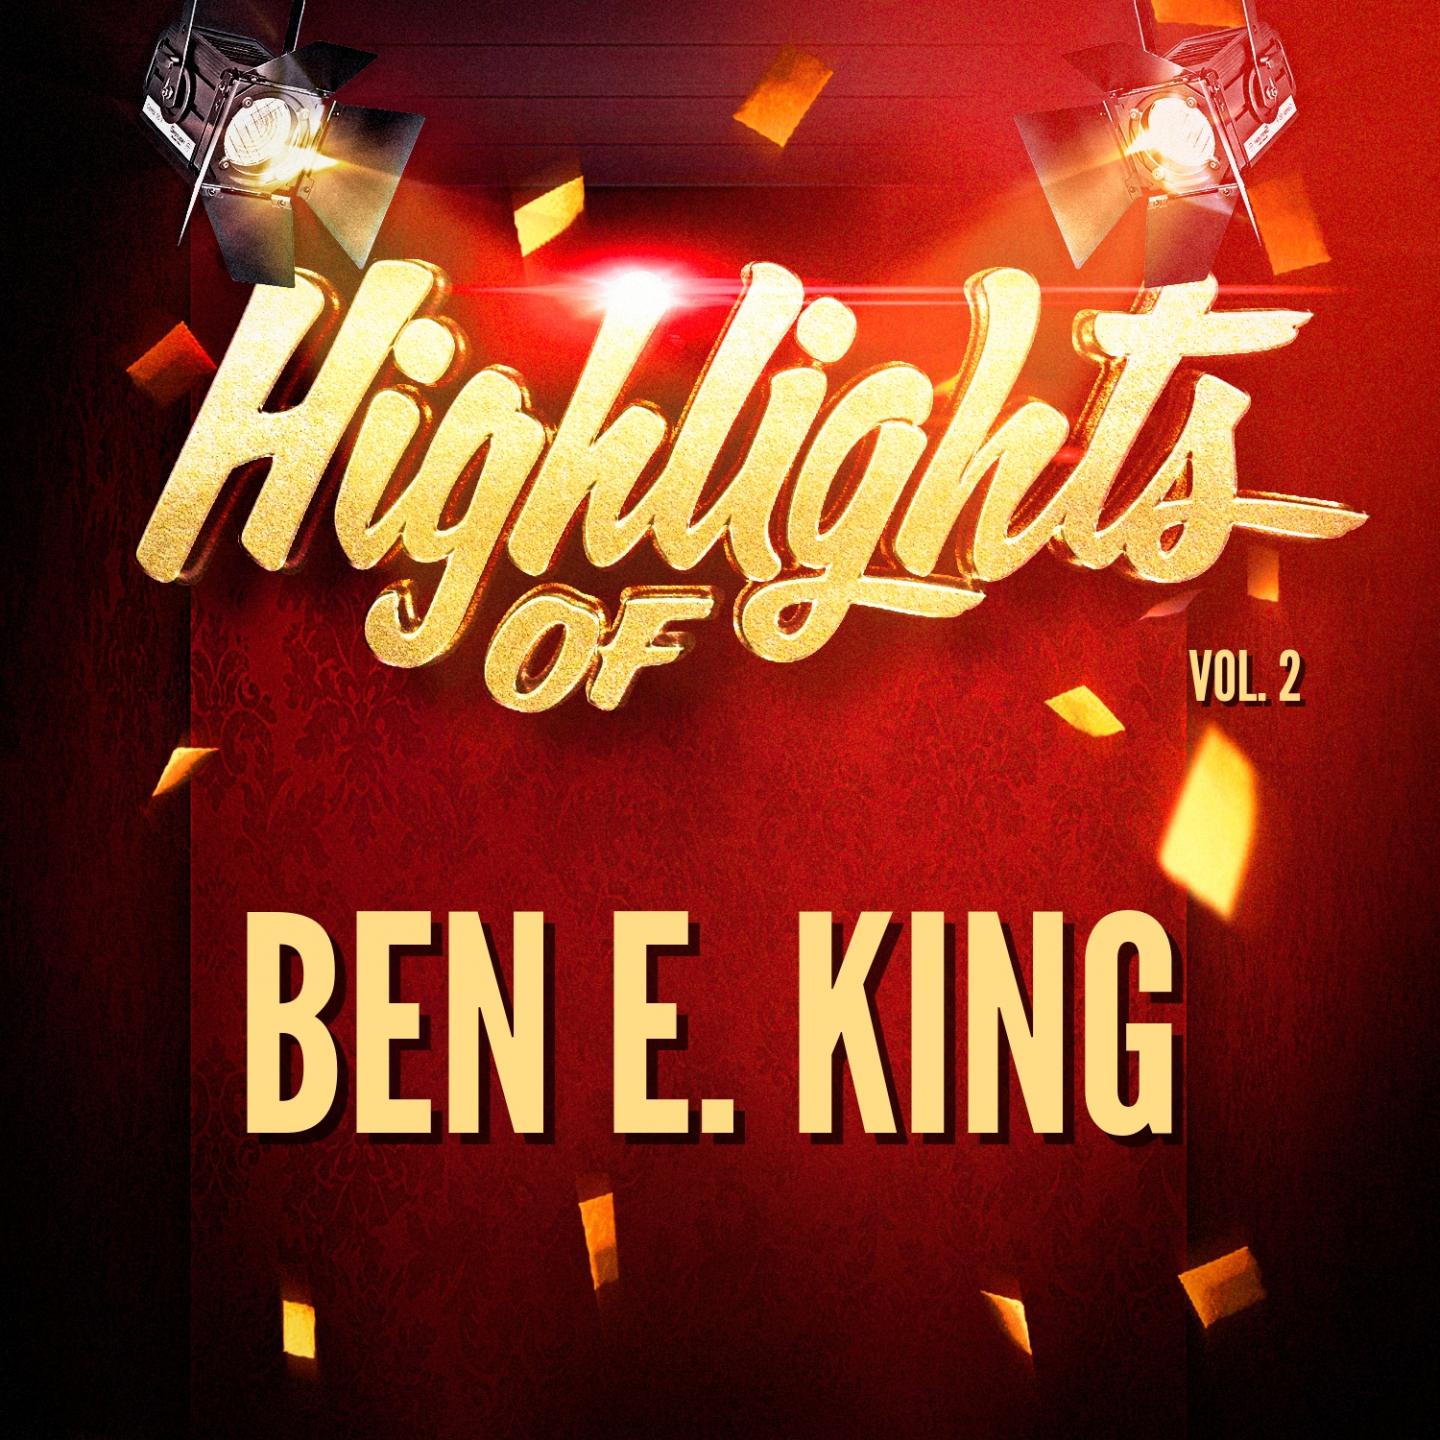 Highlights of Ben E. King, Vol. 2